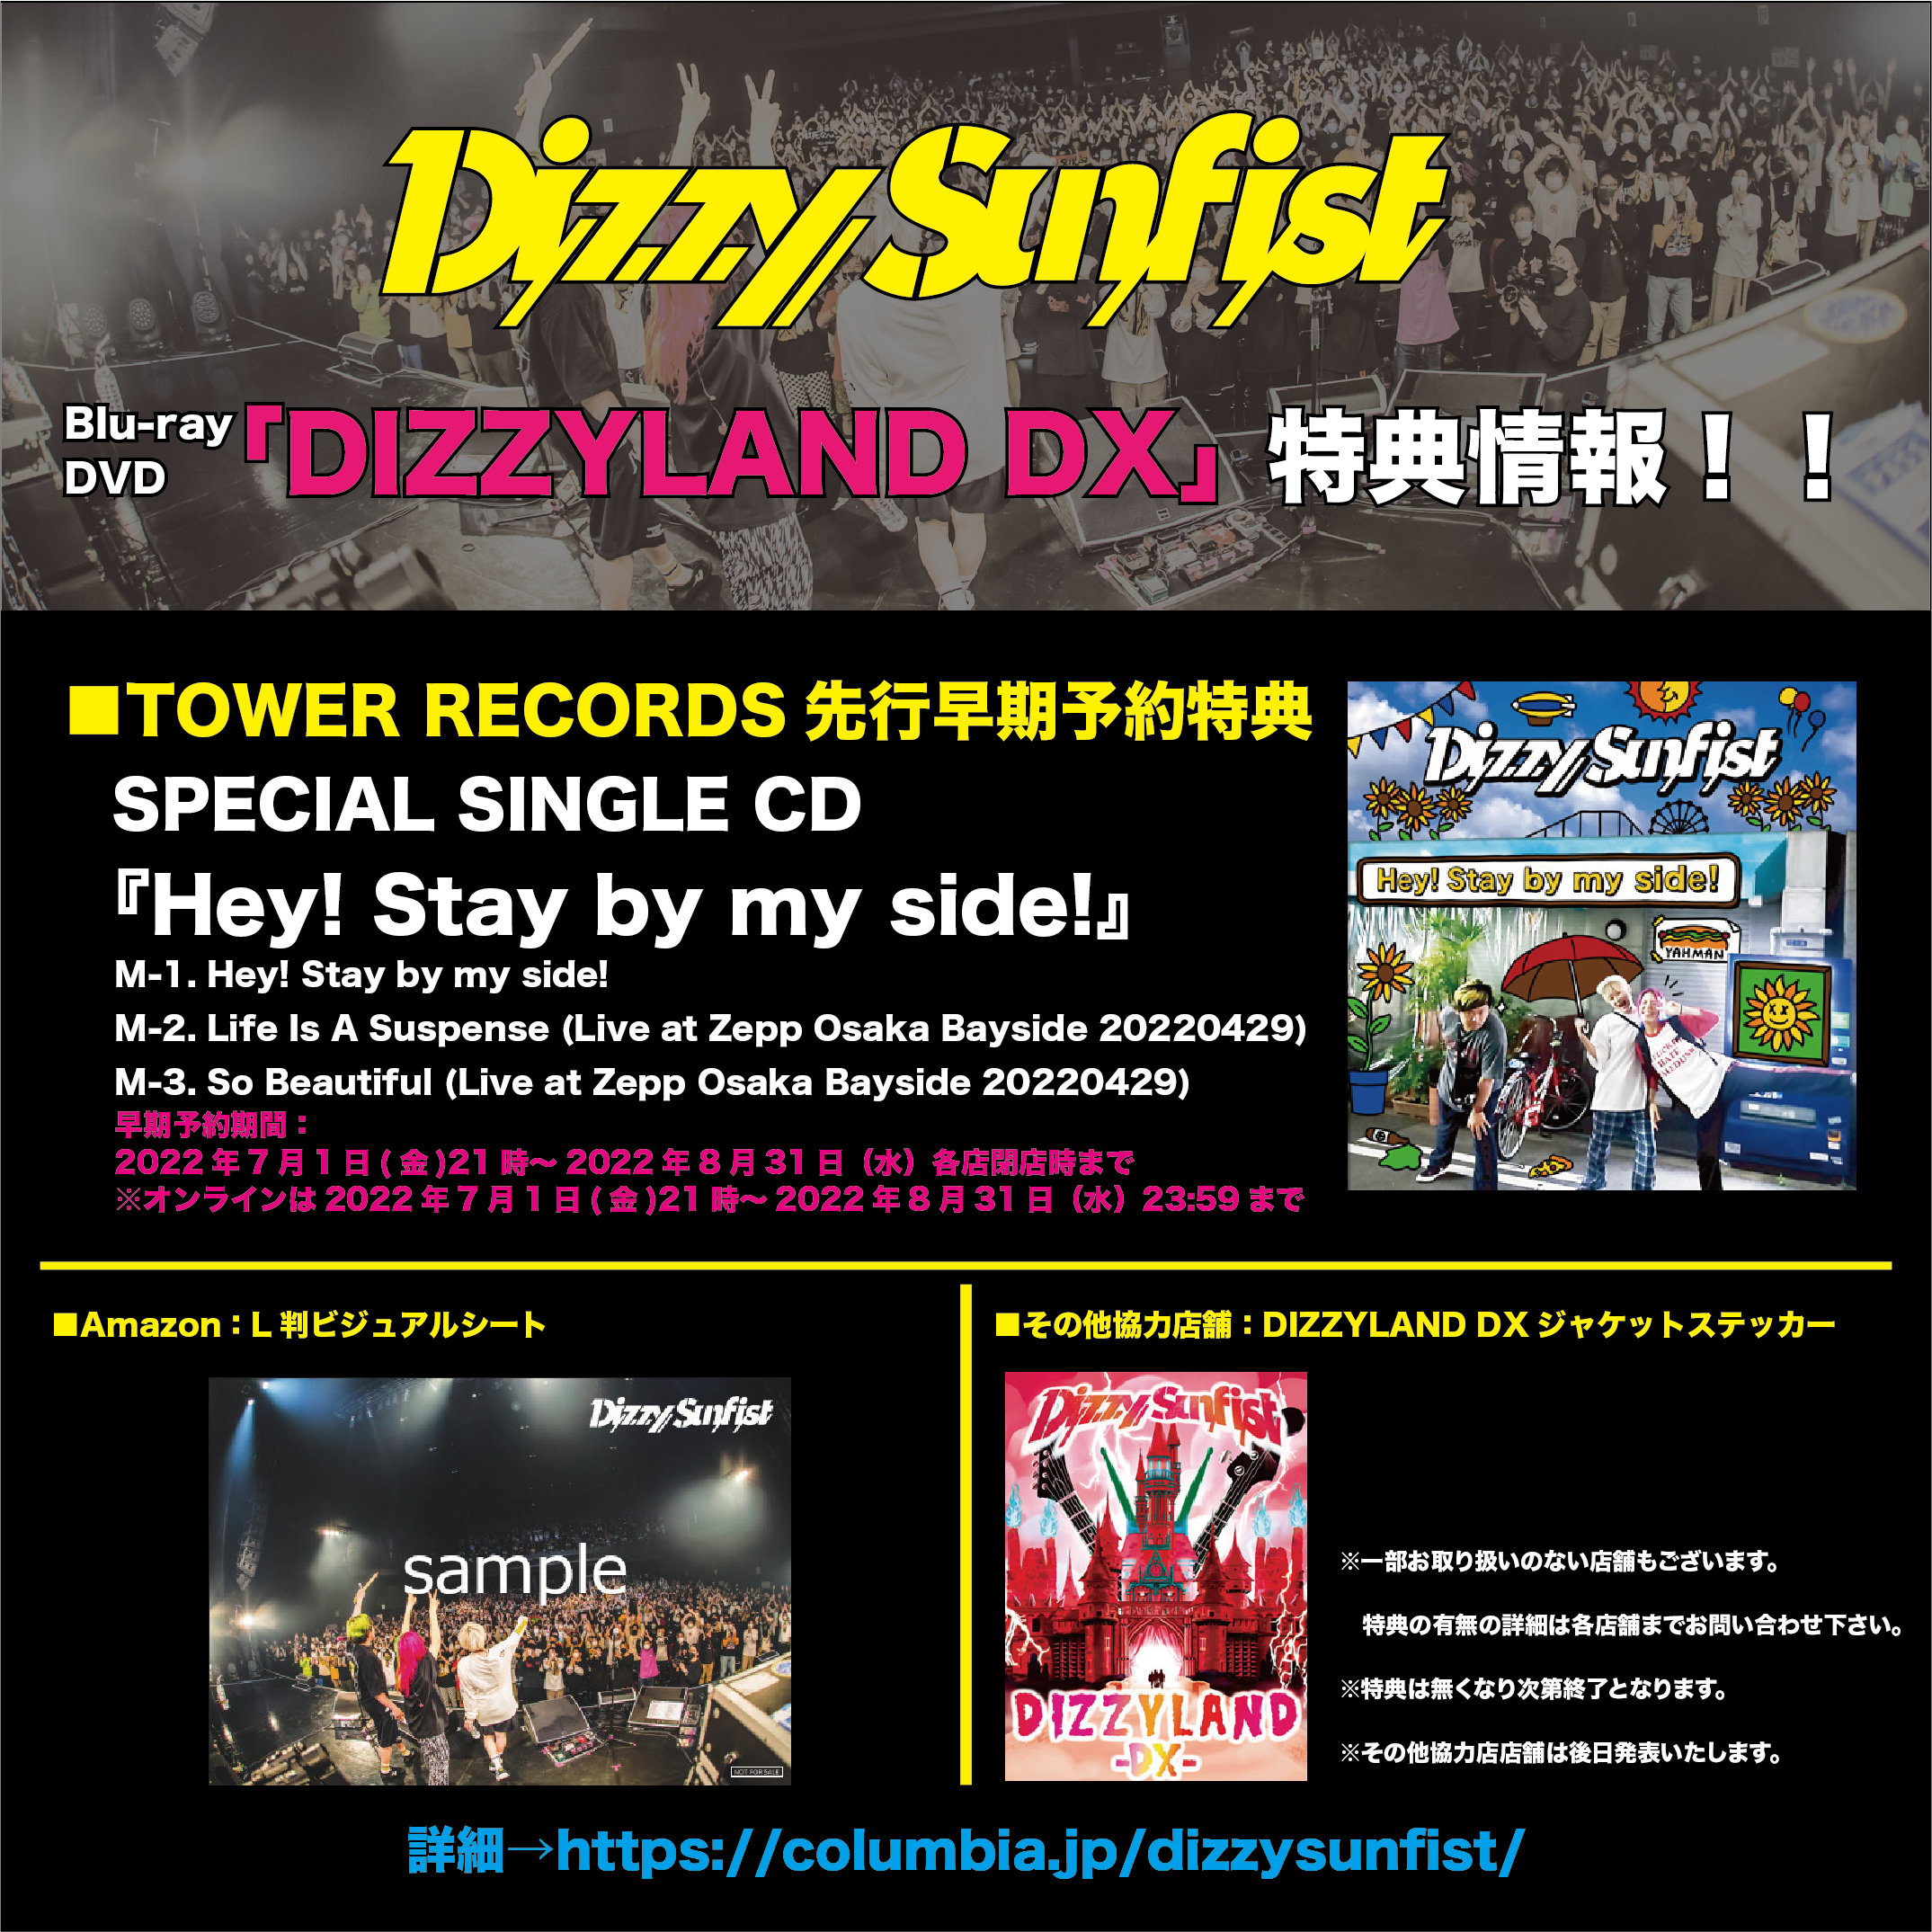 2022/10/05(WED)リリース Blu-ray / DVD「DIZZYLAND DX」特典内容詳細 